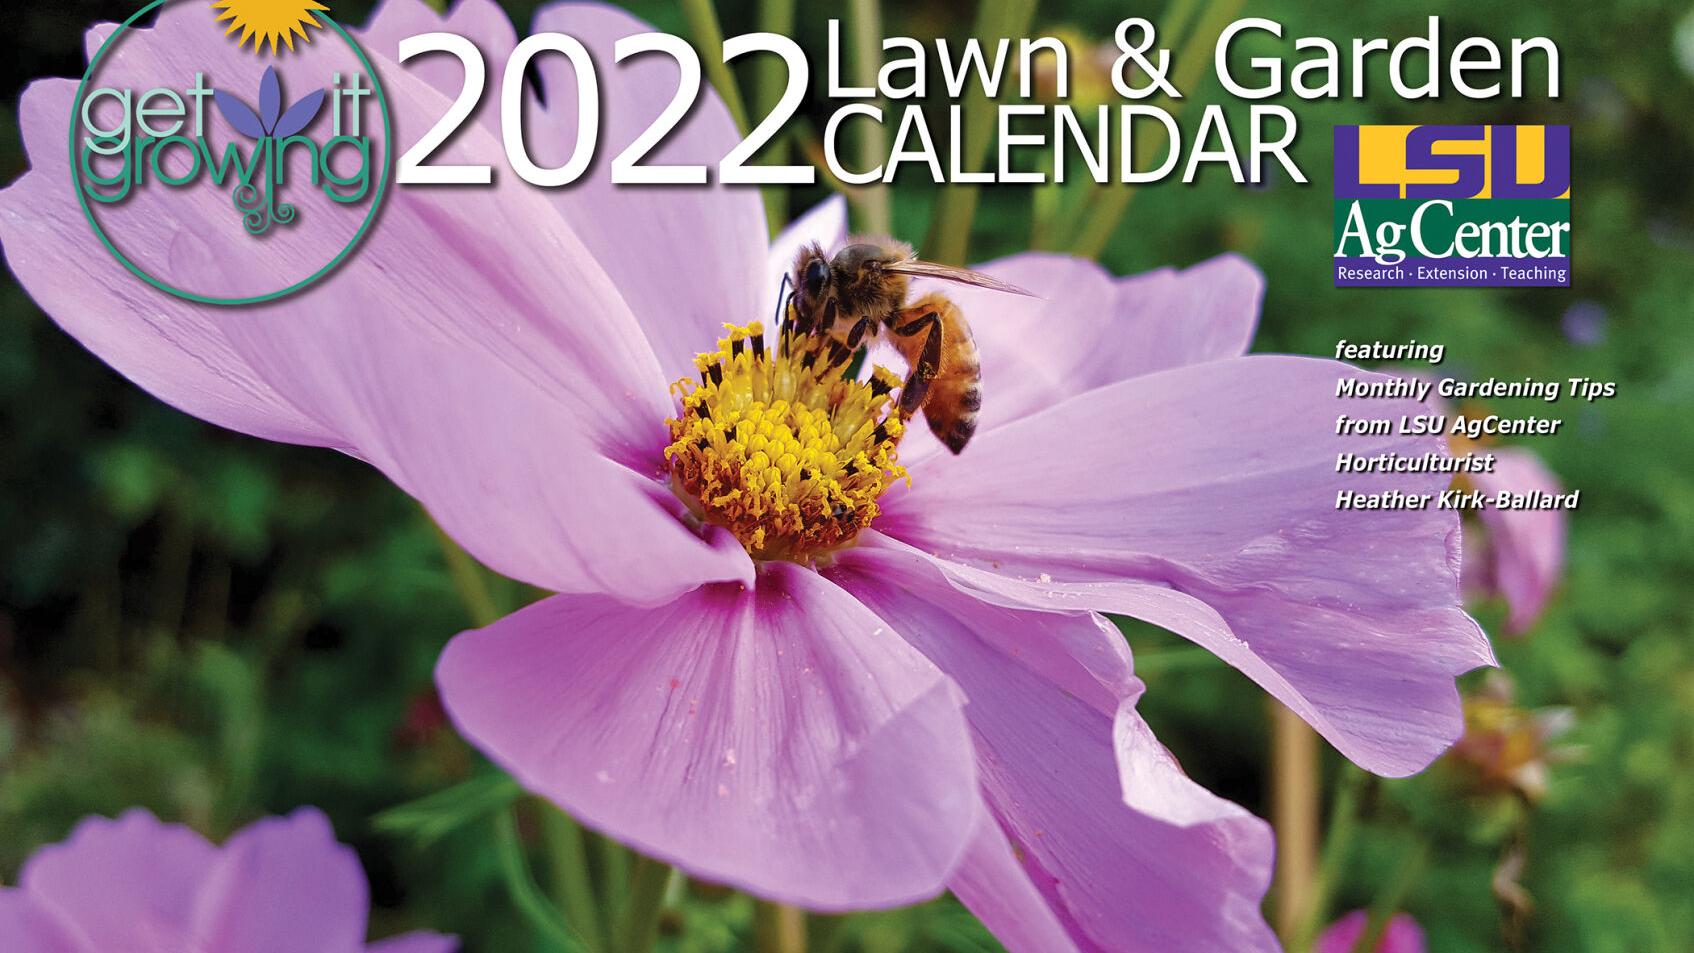 Lsu 2022 Calendar Get It Growing With Lsu Agcenter's Calendar For 2022 | Home/Garden |  Theadvocate.com